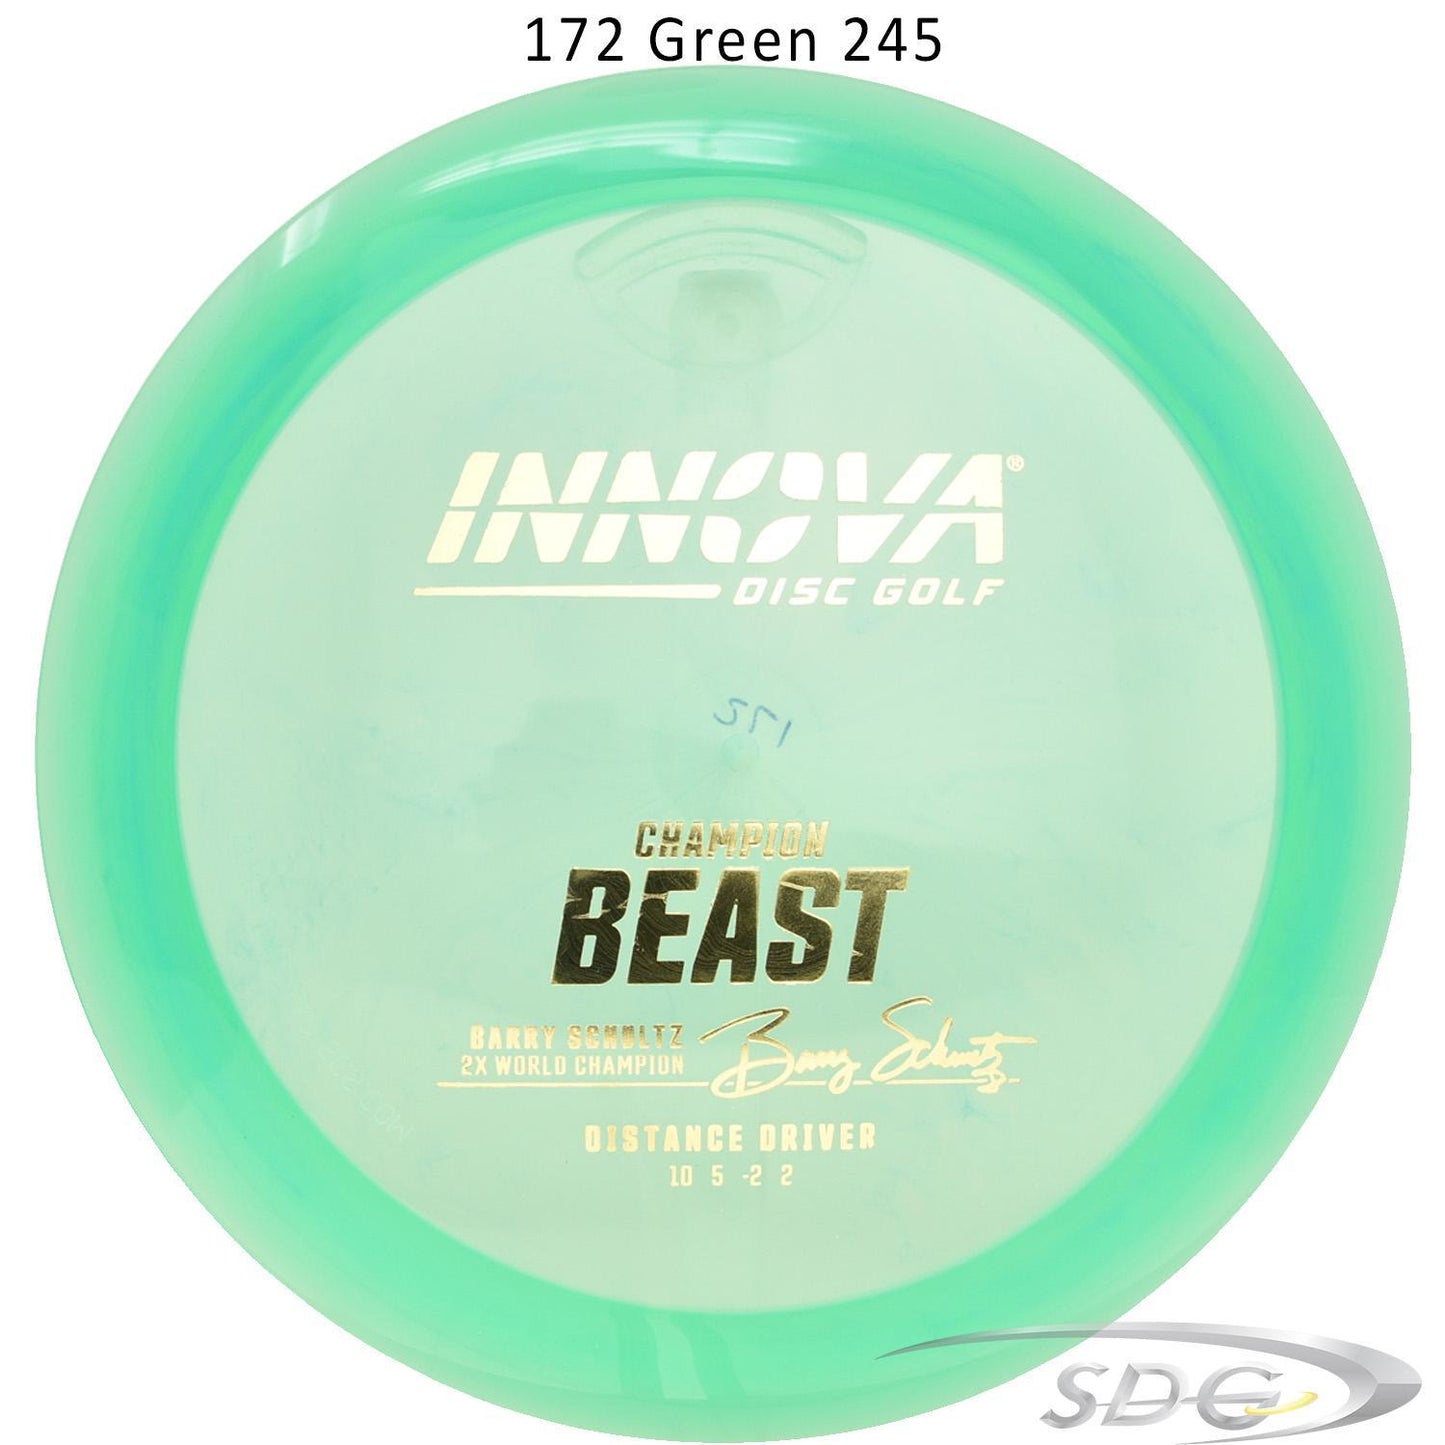 innova-champion-beast-disc-golf-distance-driver 172 Green 245